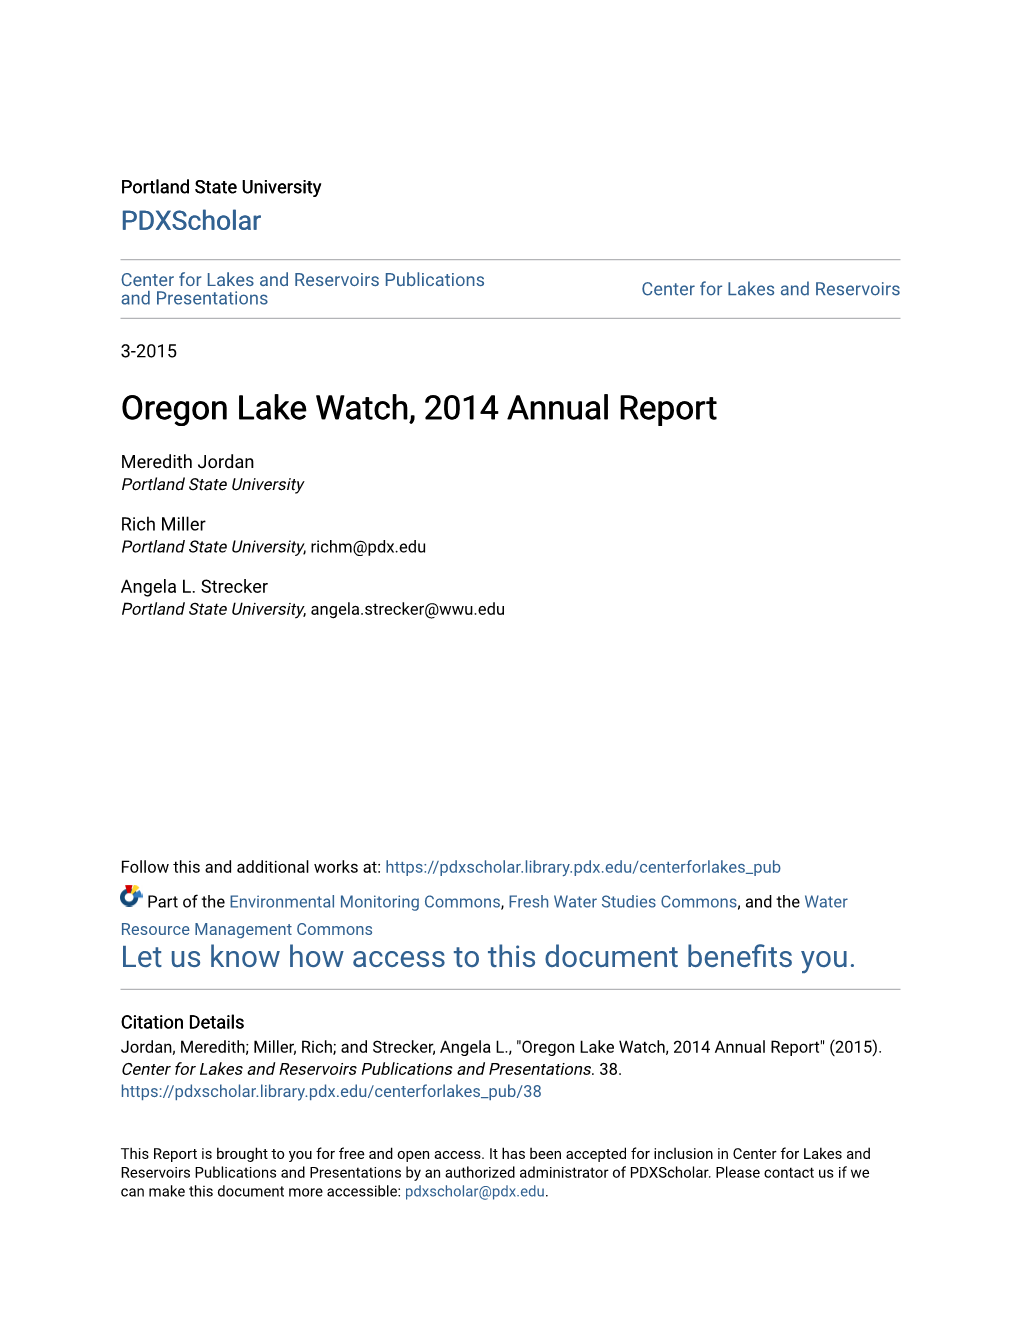 Oregon Lake Watch, 2014 Annual Report